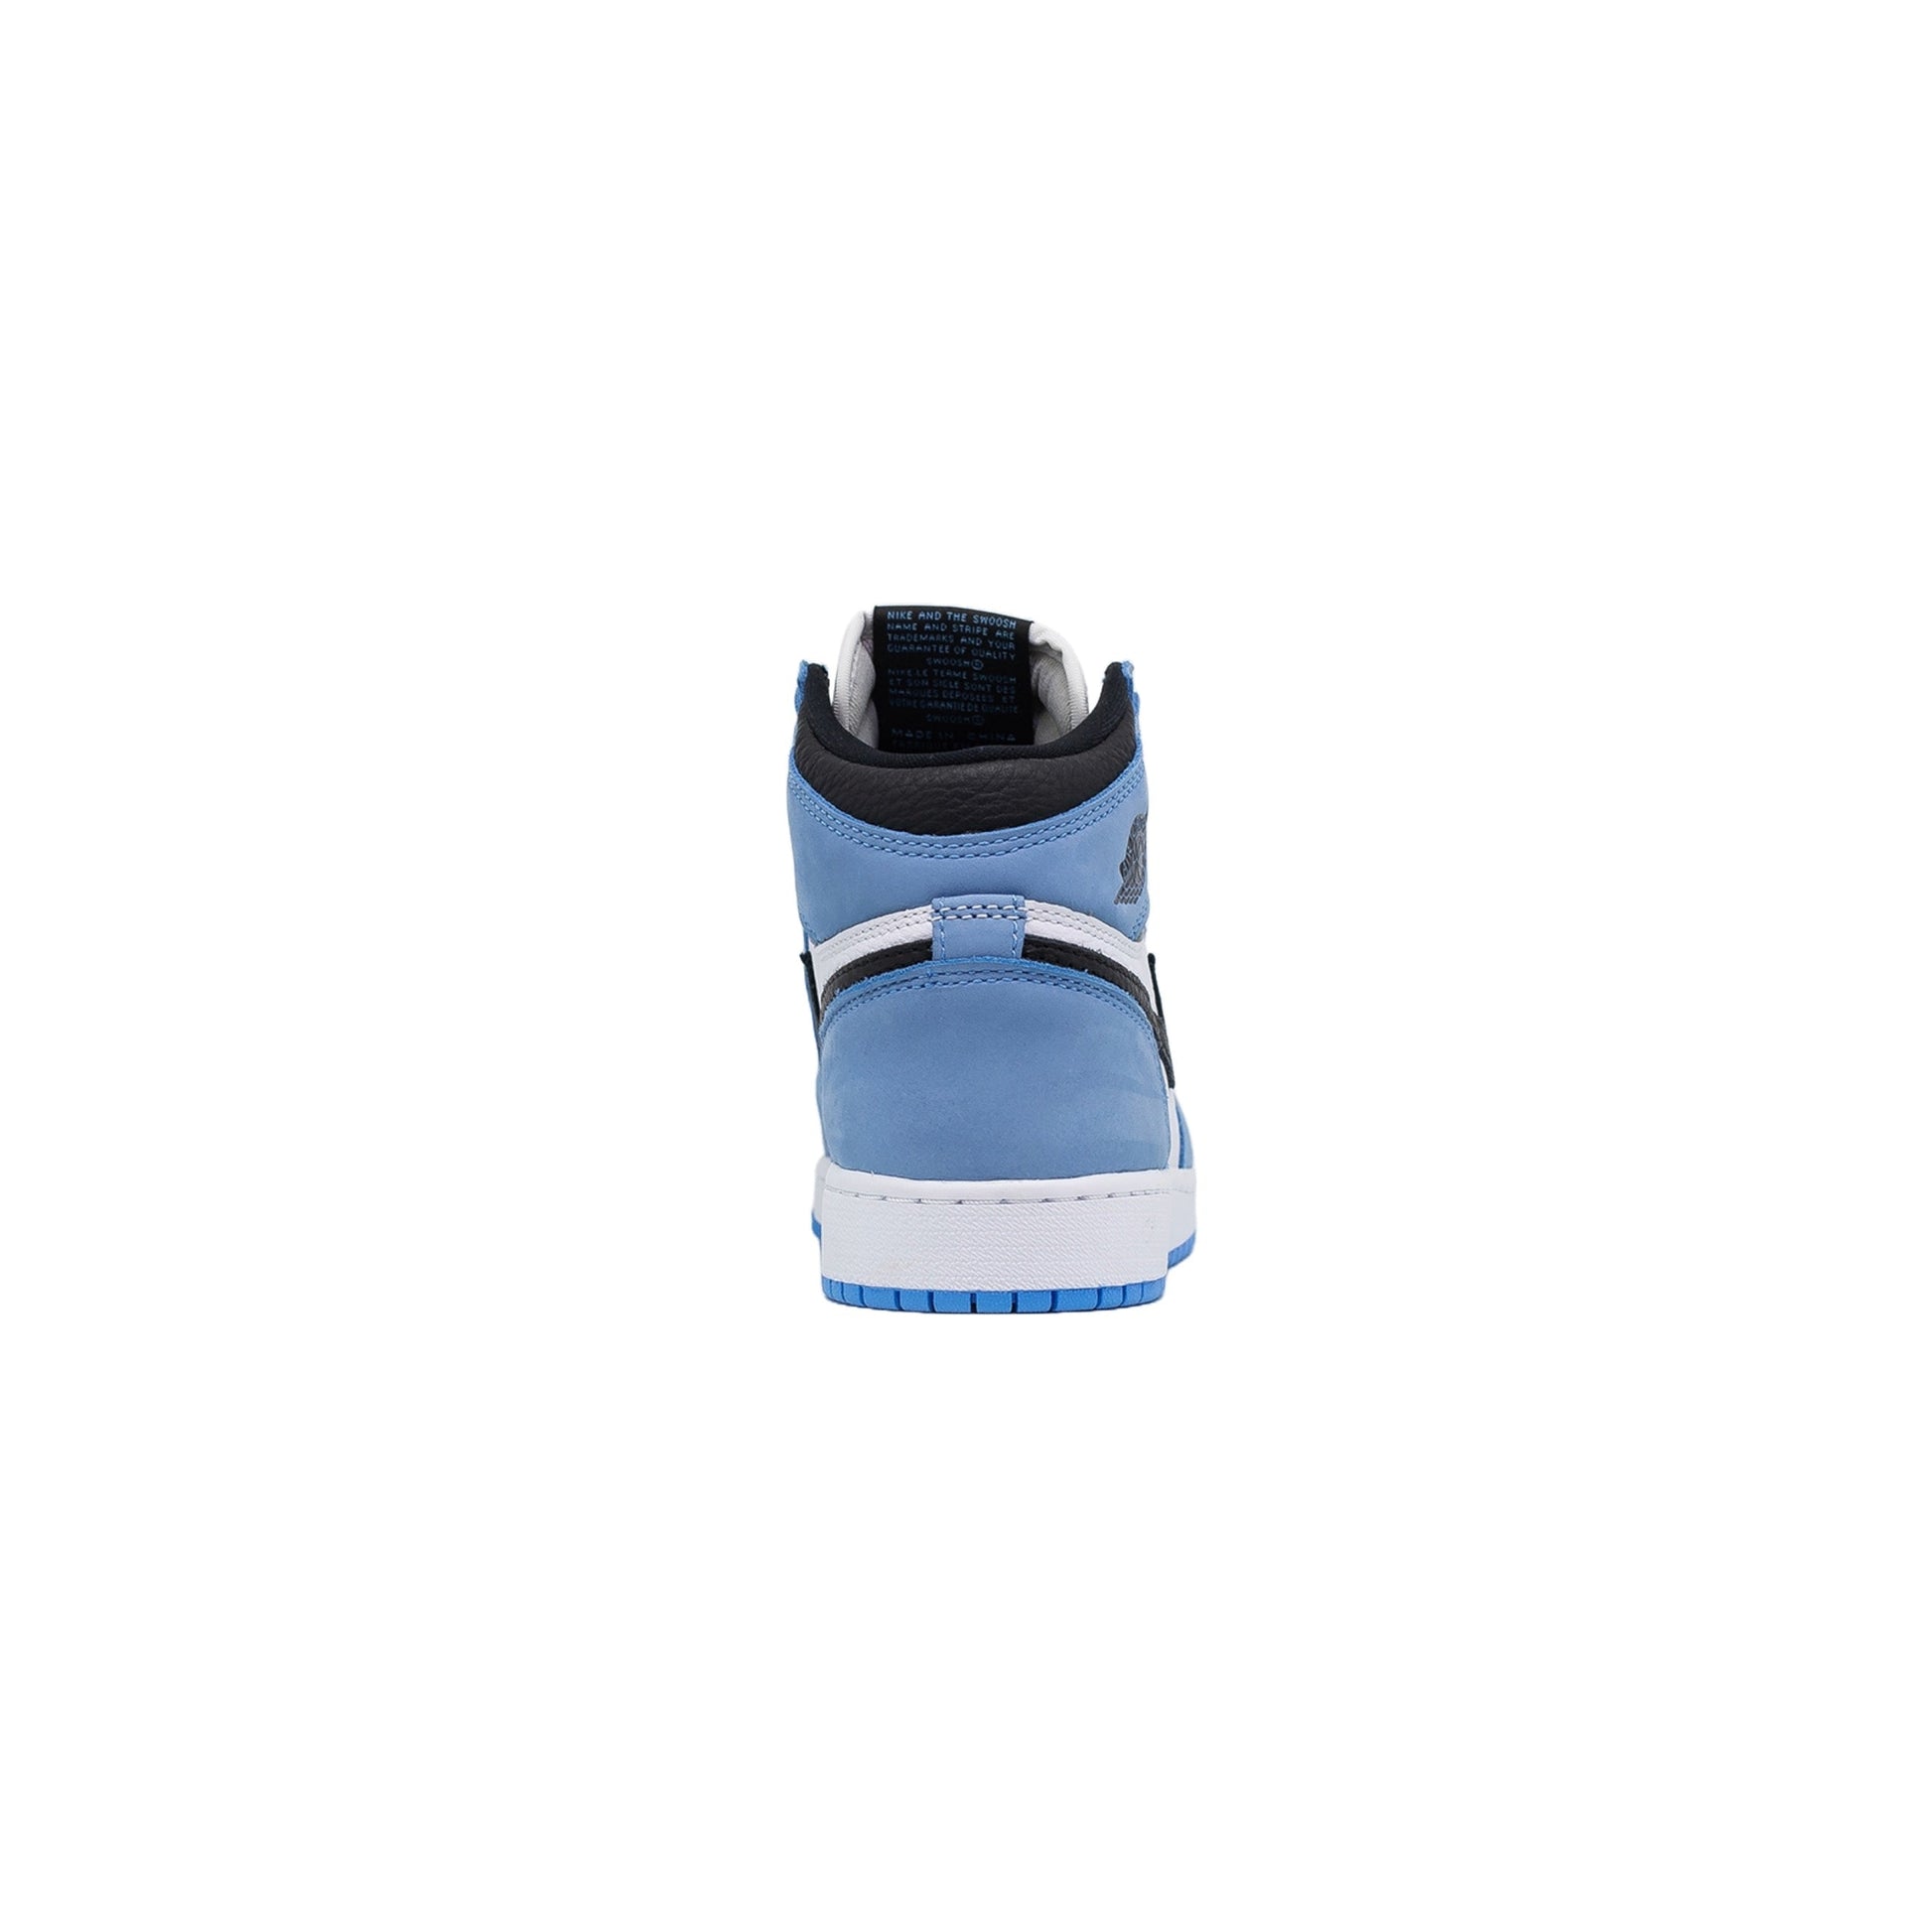 Air Nike Jordan Granville Pro SP Mens Trainers Rattan Pure DM2424 200 UK 9.5 10 (GS), University Blue